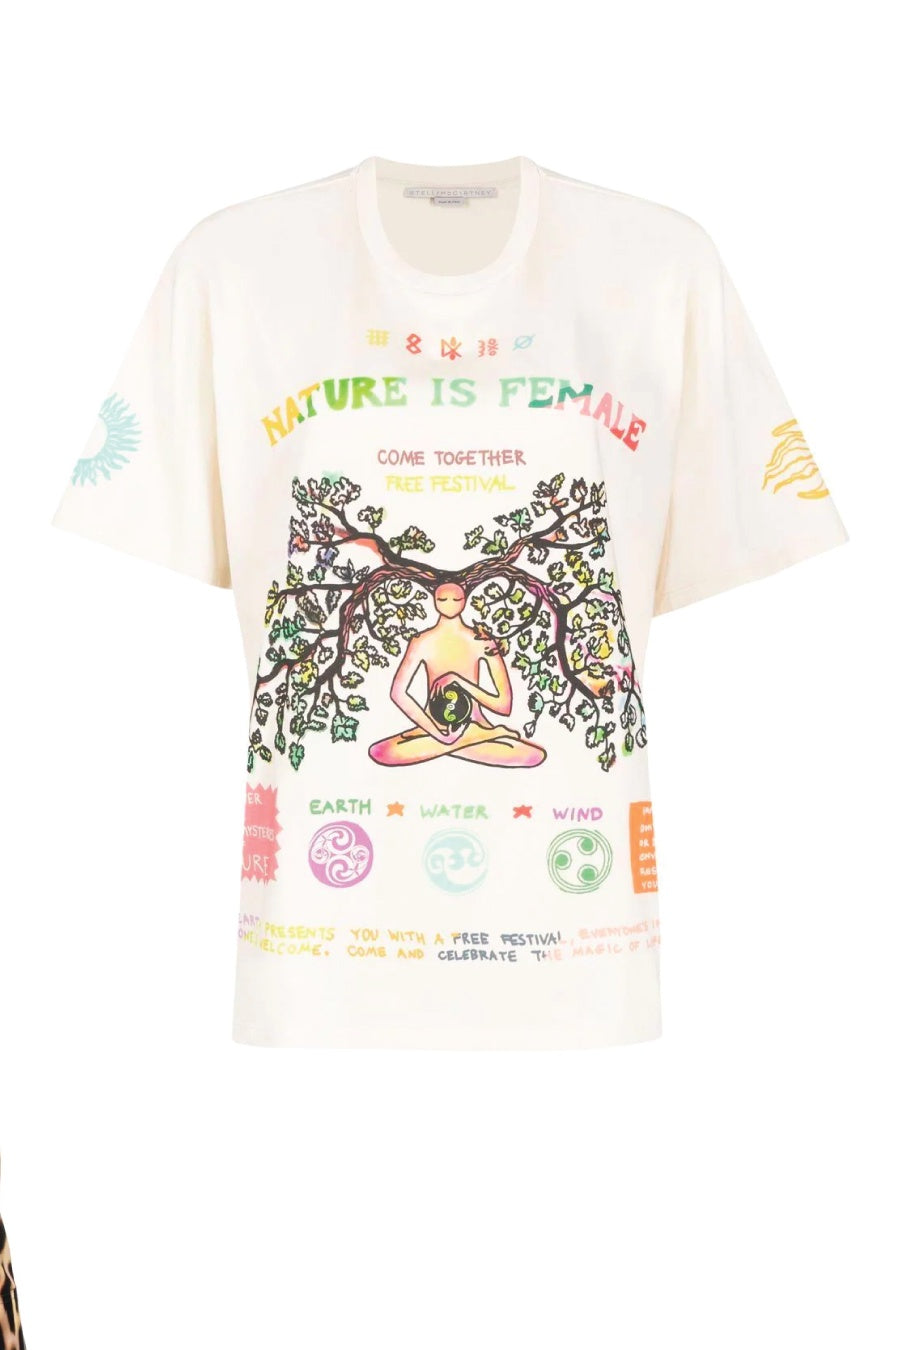 Stella McCartney Nature is Female Print T-Shirt - Magnolia